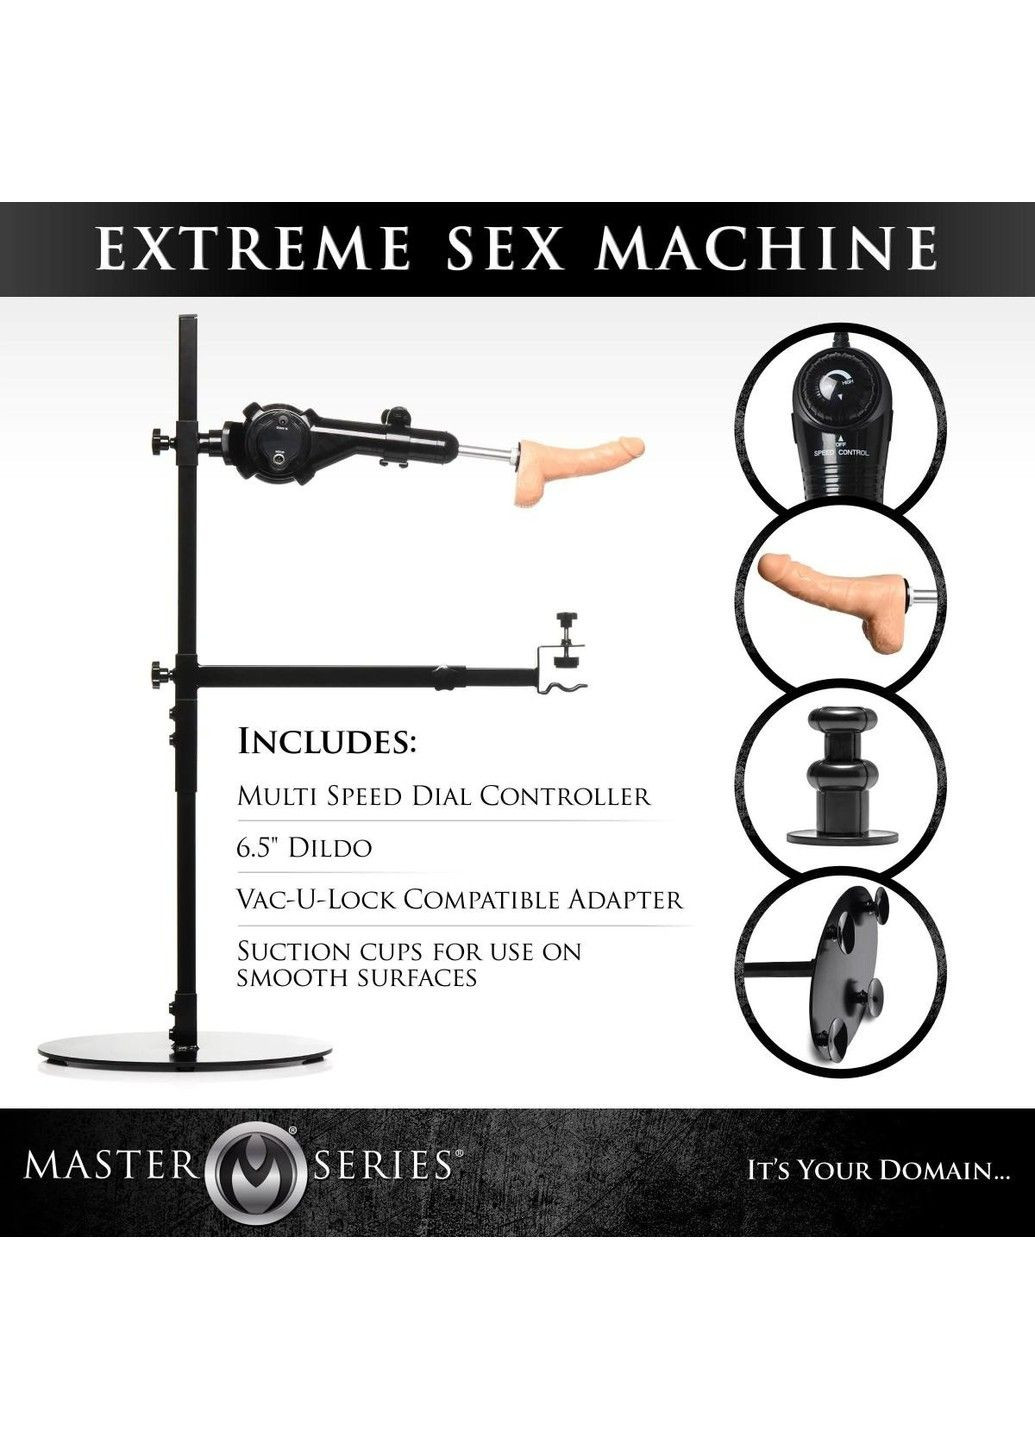 Секс-машина Dicktator 2.0 Sex Machine Master Series (289783665)